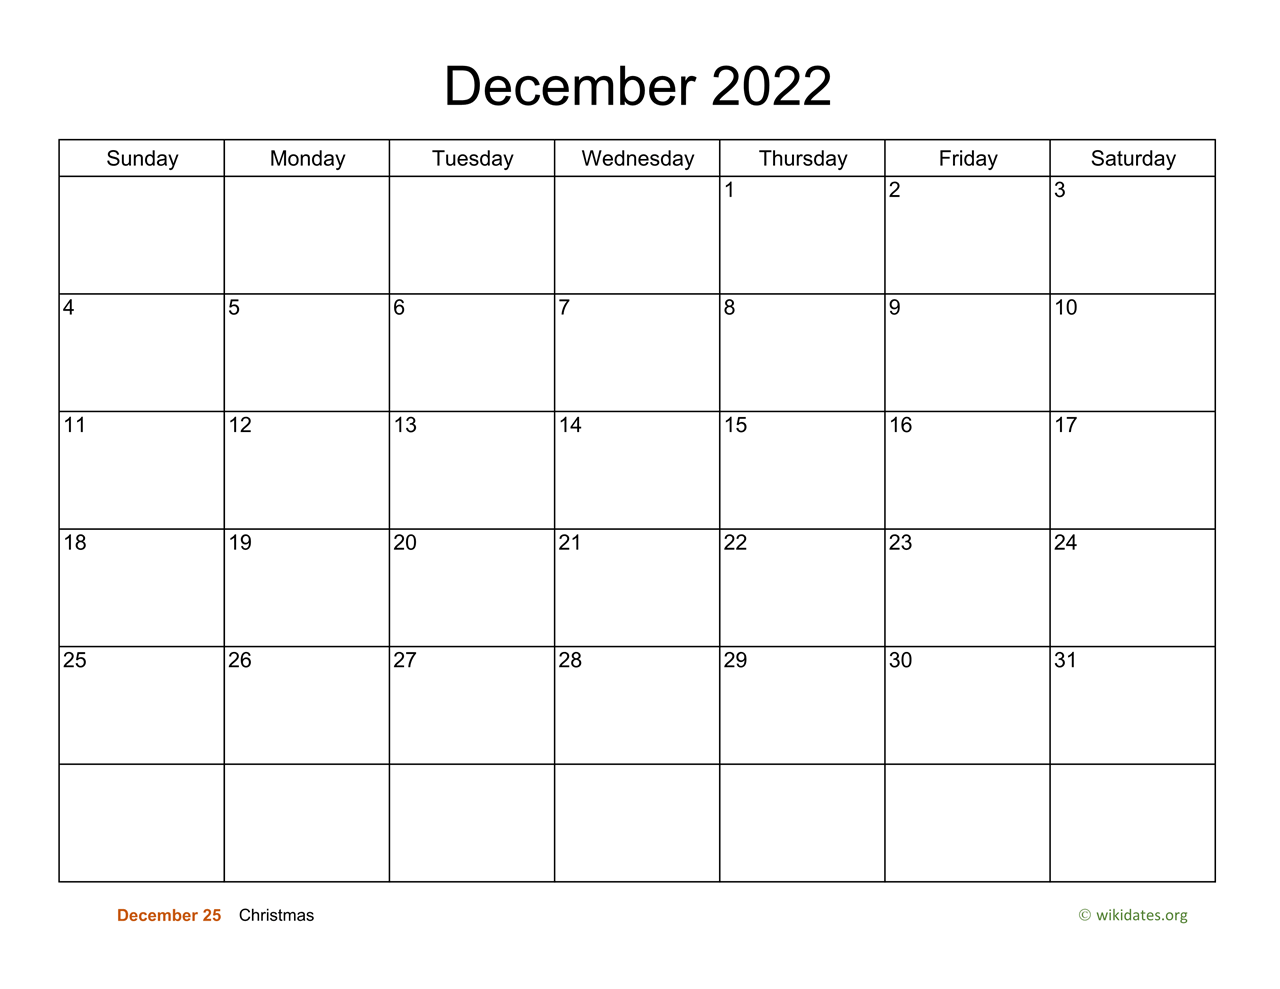 Dec 2022 Calendar Basic Calendar For December 2022 | Wikidates.org